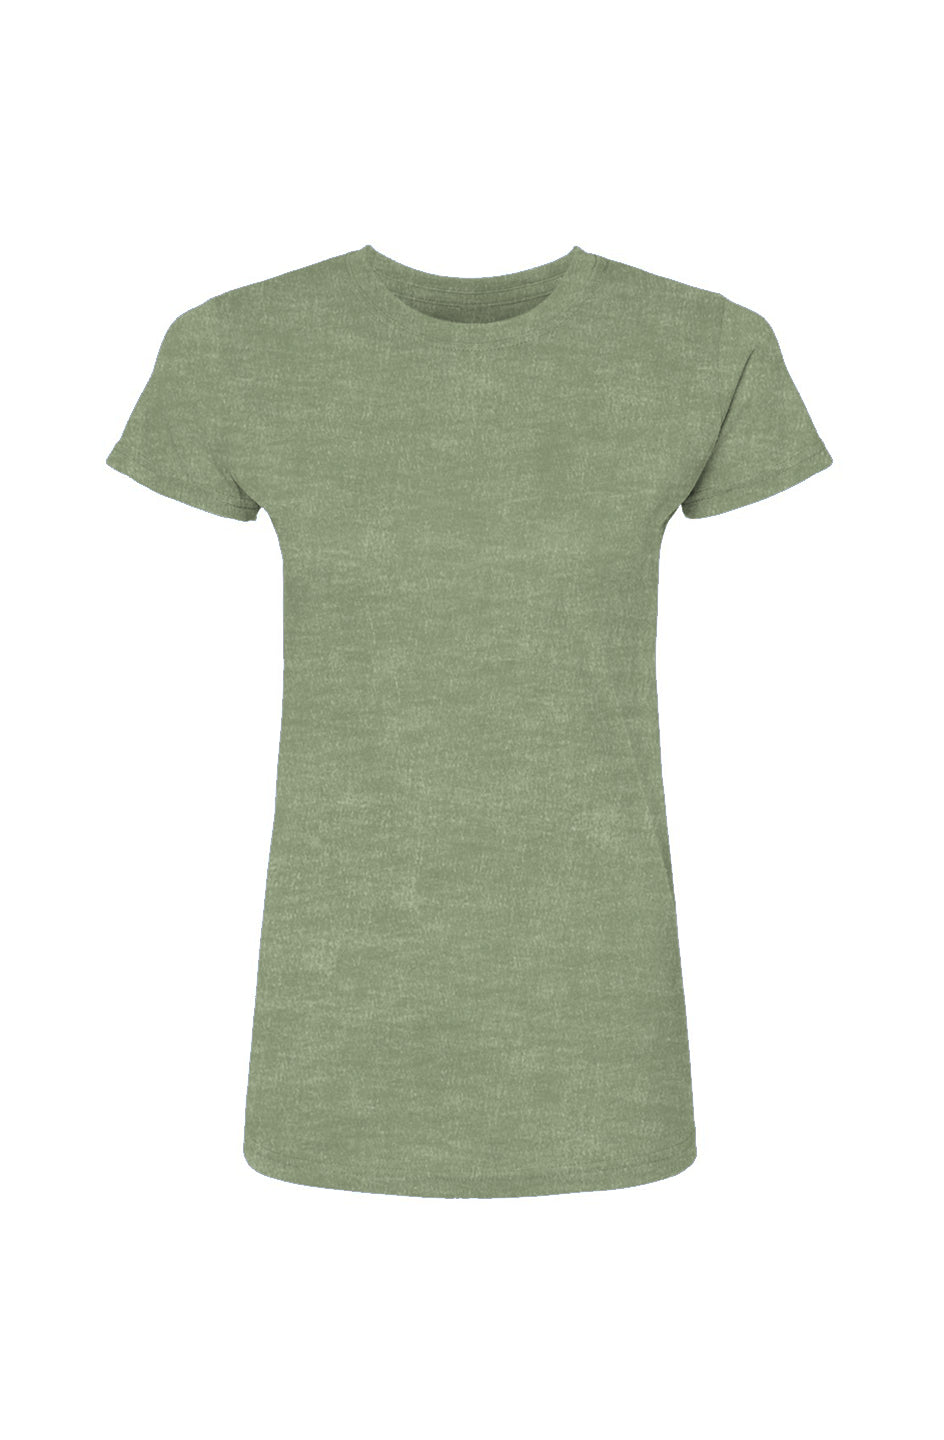 Women's Heather Green Poly-Rich T-Shirt - Women's T-shirt - Apliiq - Women's Heather Green Poly-Rich T-Shirt - APQ-4651975S5A0 - xs - heather green - Casual Stylish Wear - Dragon Foxx™ - Durable women's top